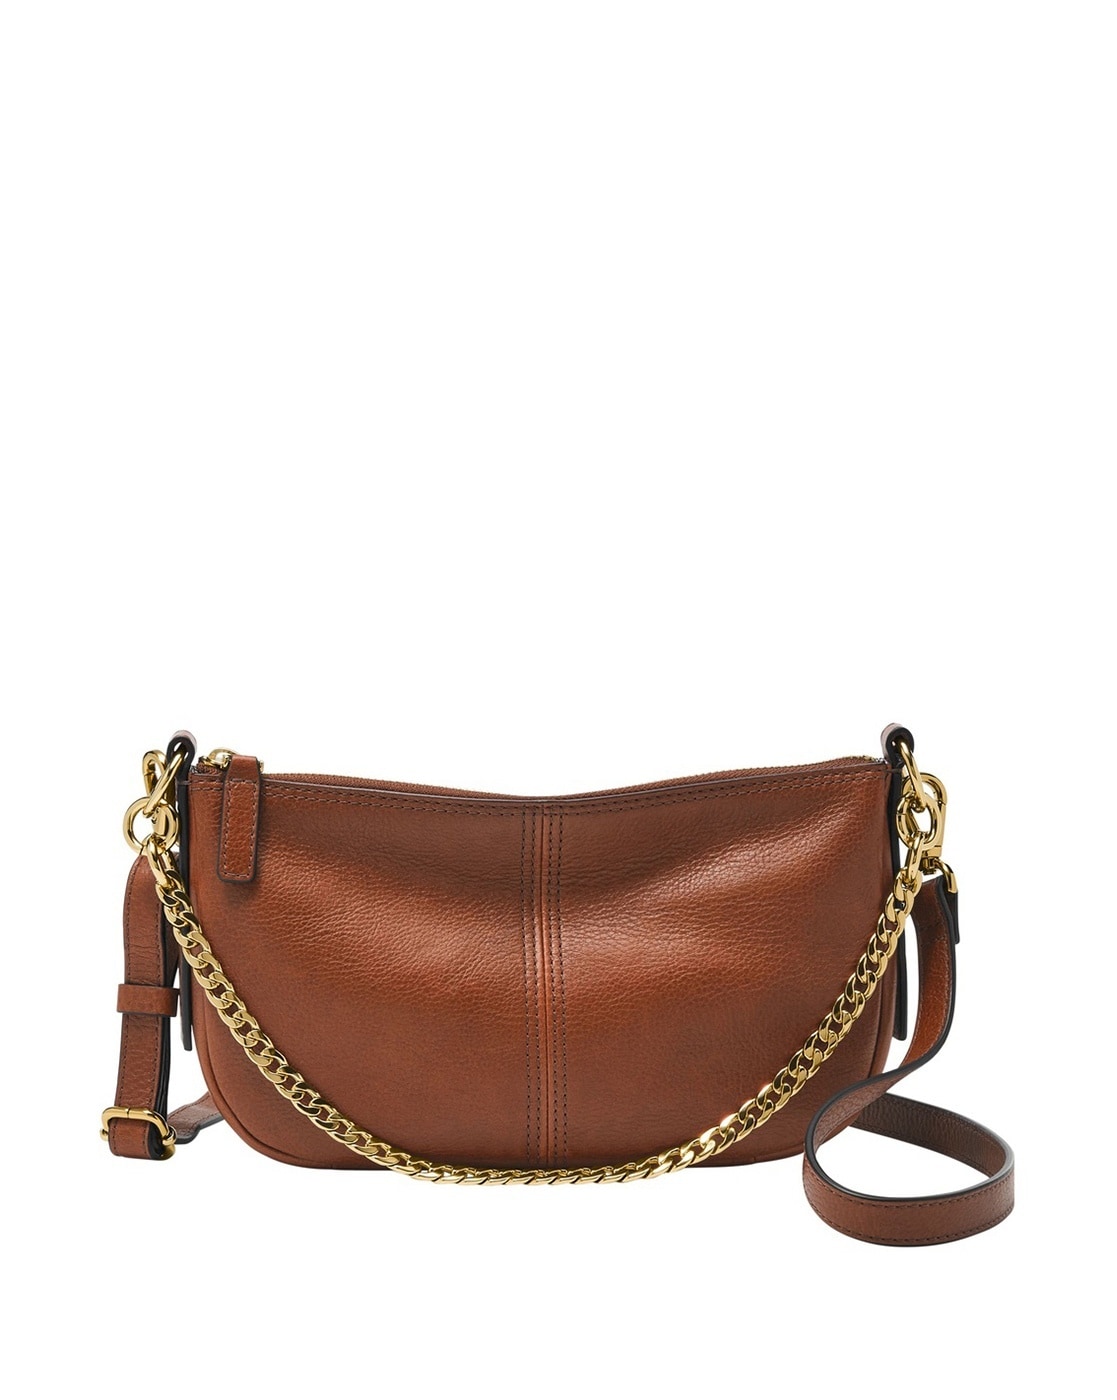 Liz Claiborne handbag/purse, very clean | Liz claiborne, Off white bag,  Brown leather shoulder bag